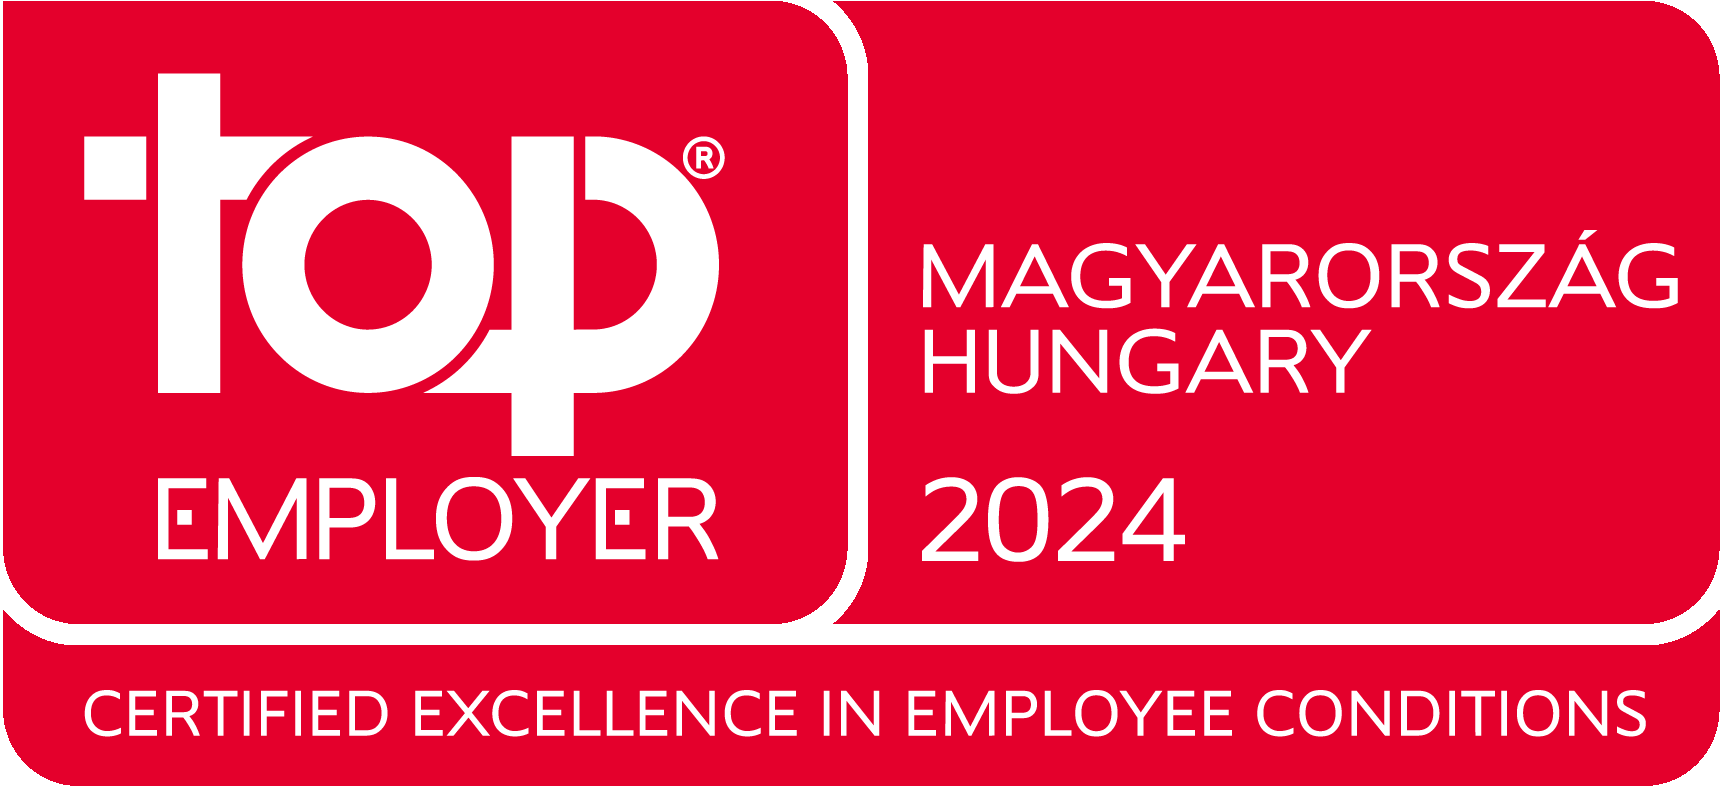 Top Employer 2024